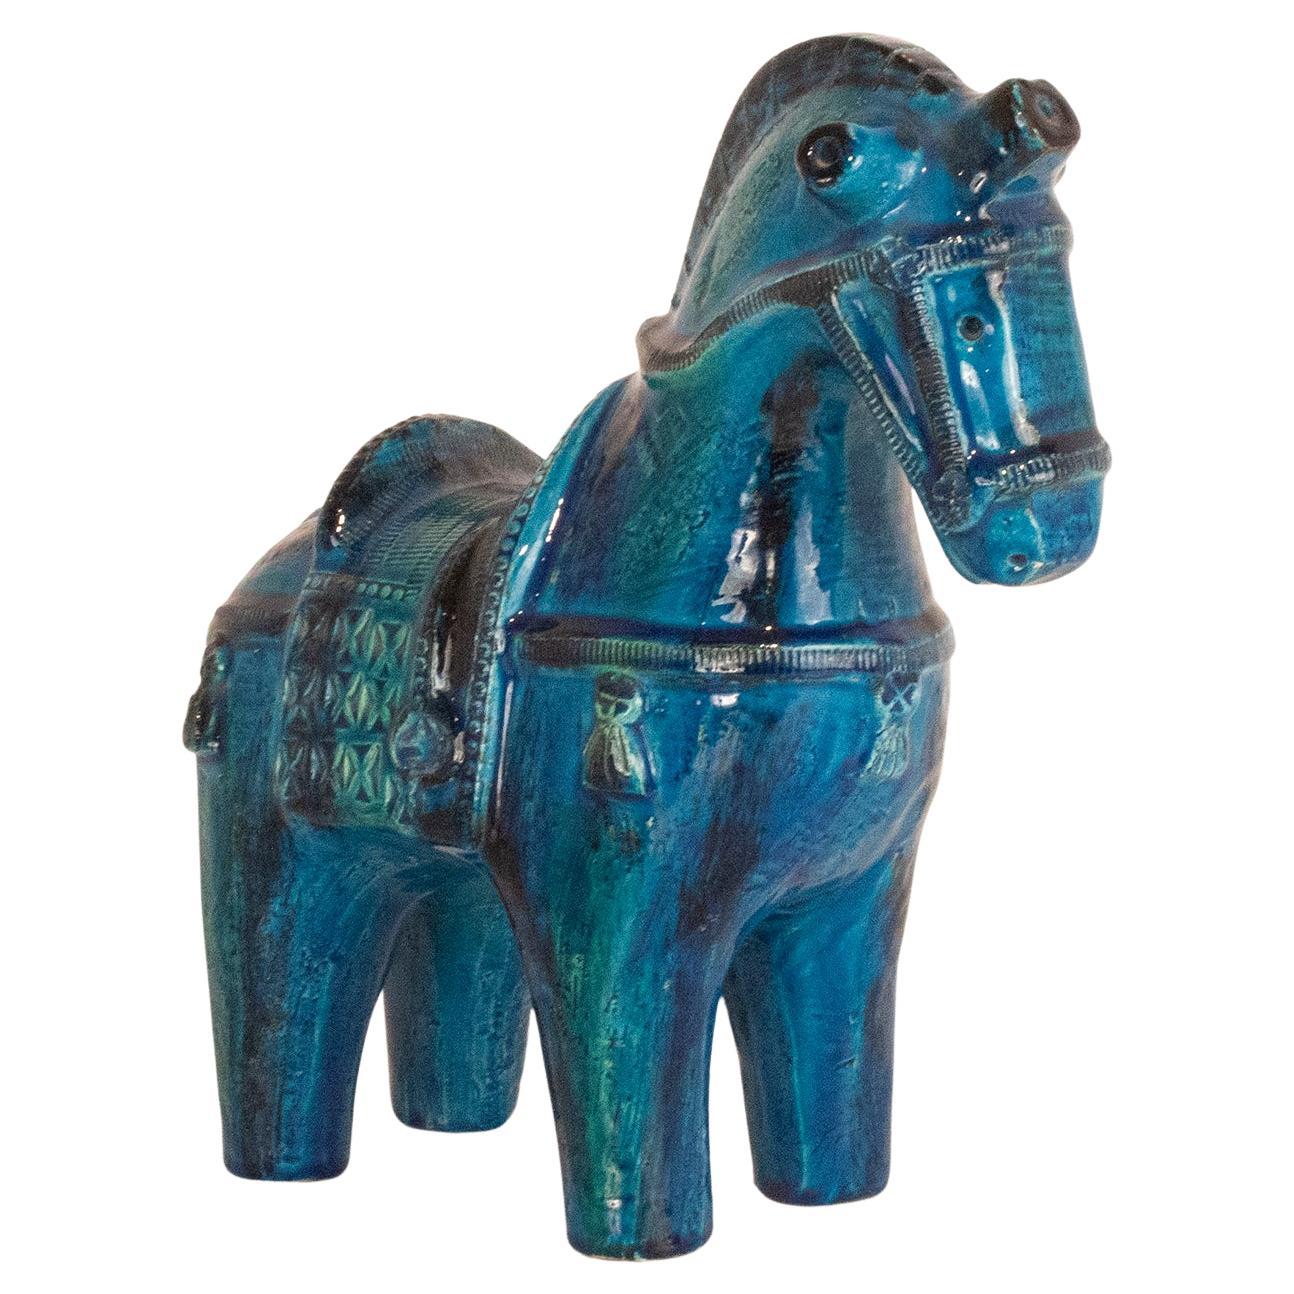 Bitossi Aldo Londi Rimini Blu Horse, Italy, 1960s